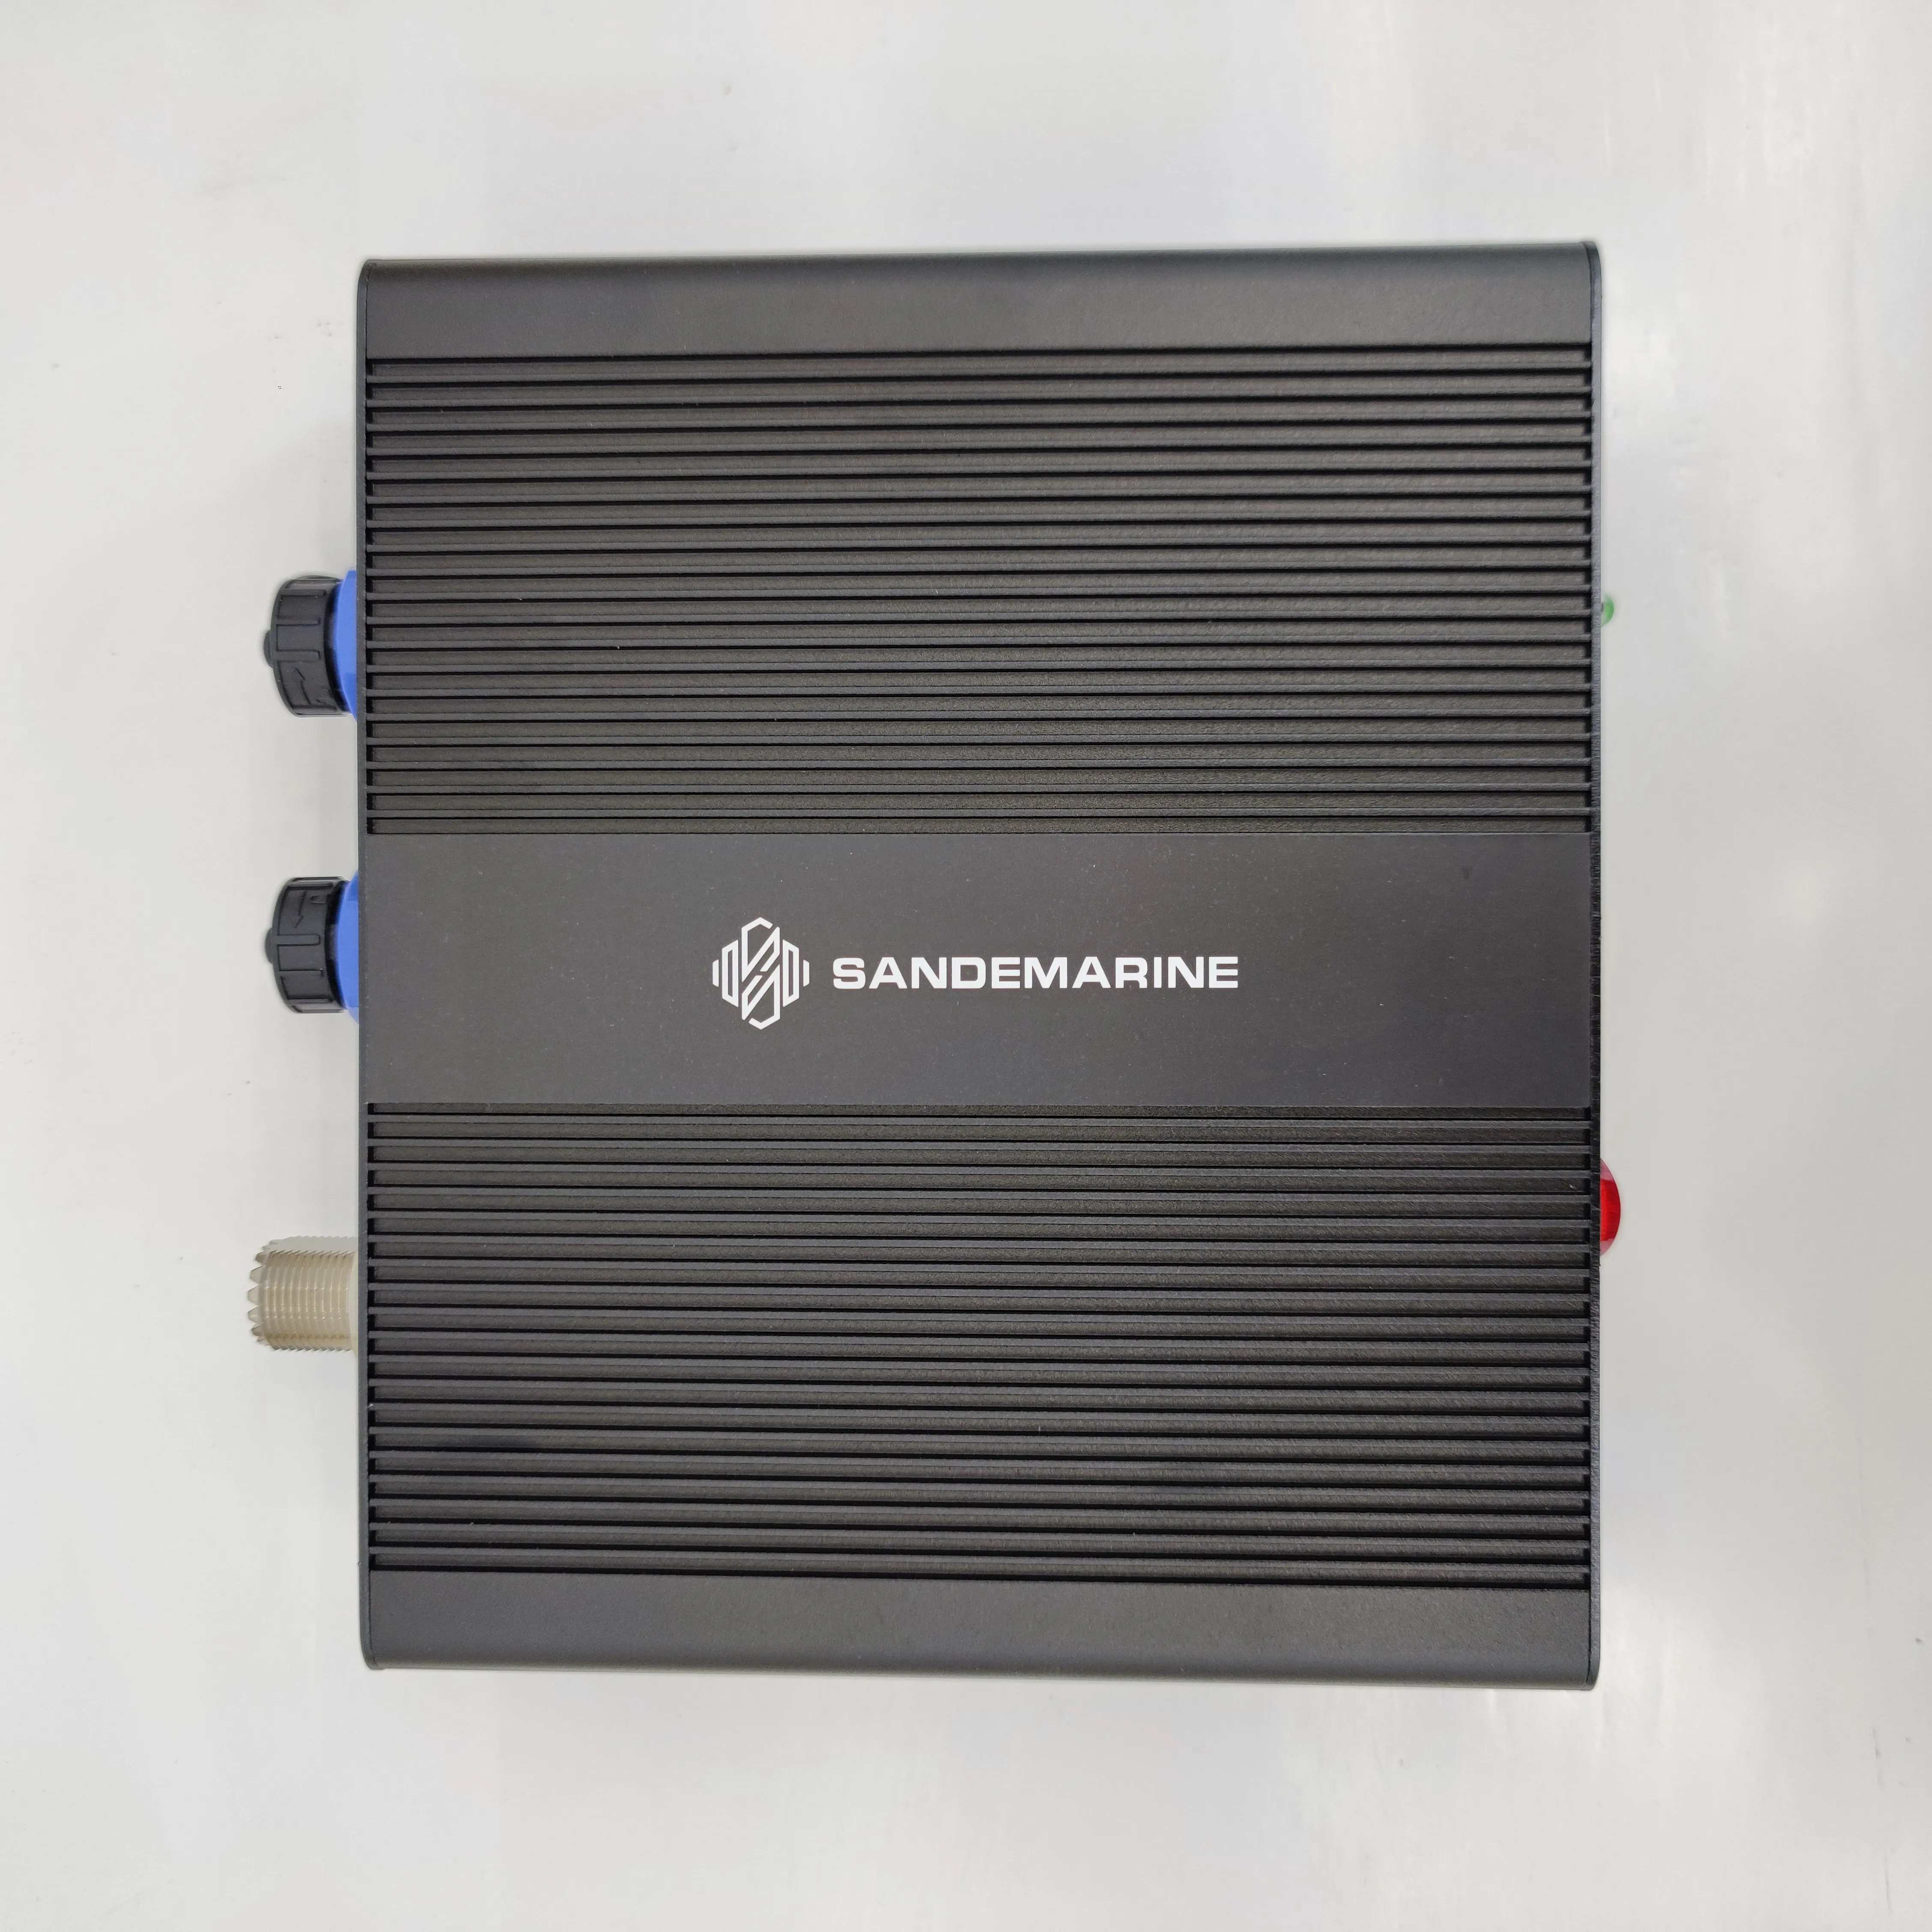 Sandemarine-Récepteur de cryptage AIS, haute précision, GPS marin, WR200